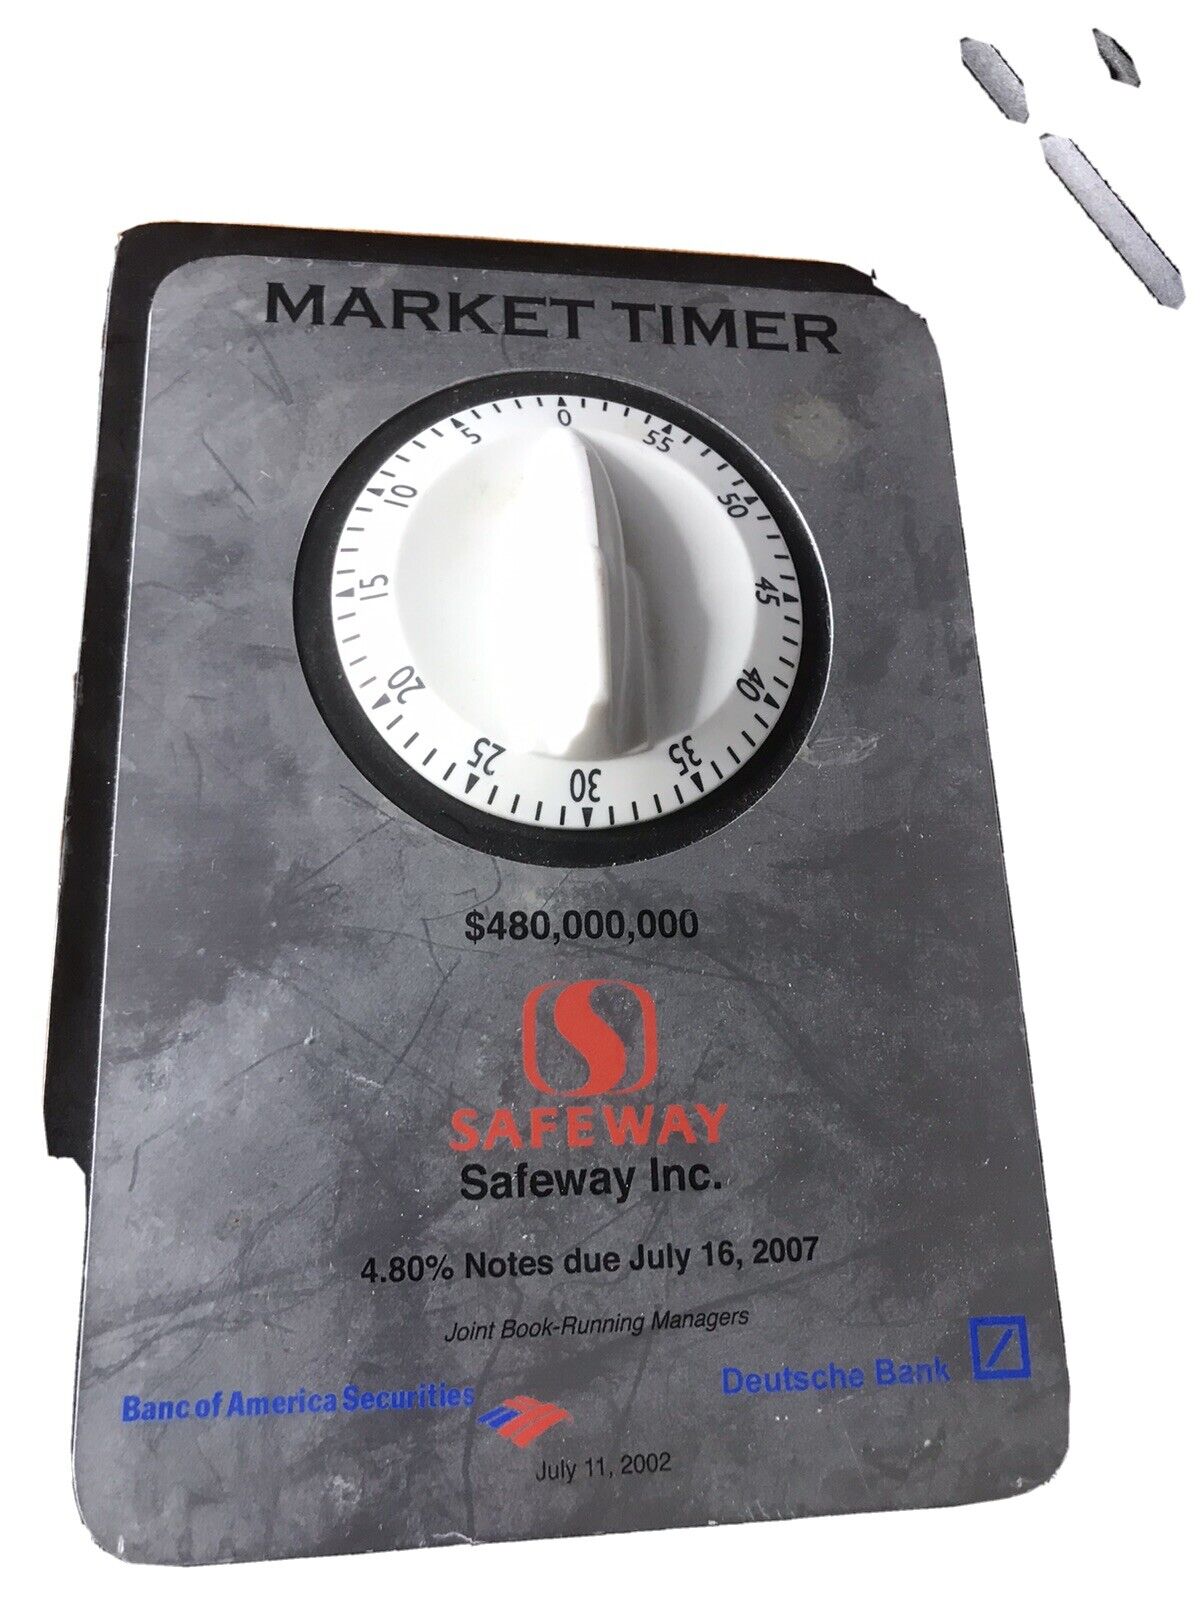 safeway market timer  Time Electric Timer Vintage securities advertisement notes